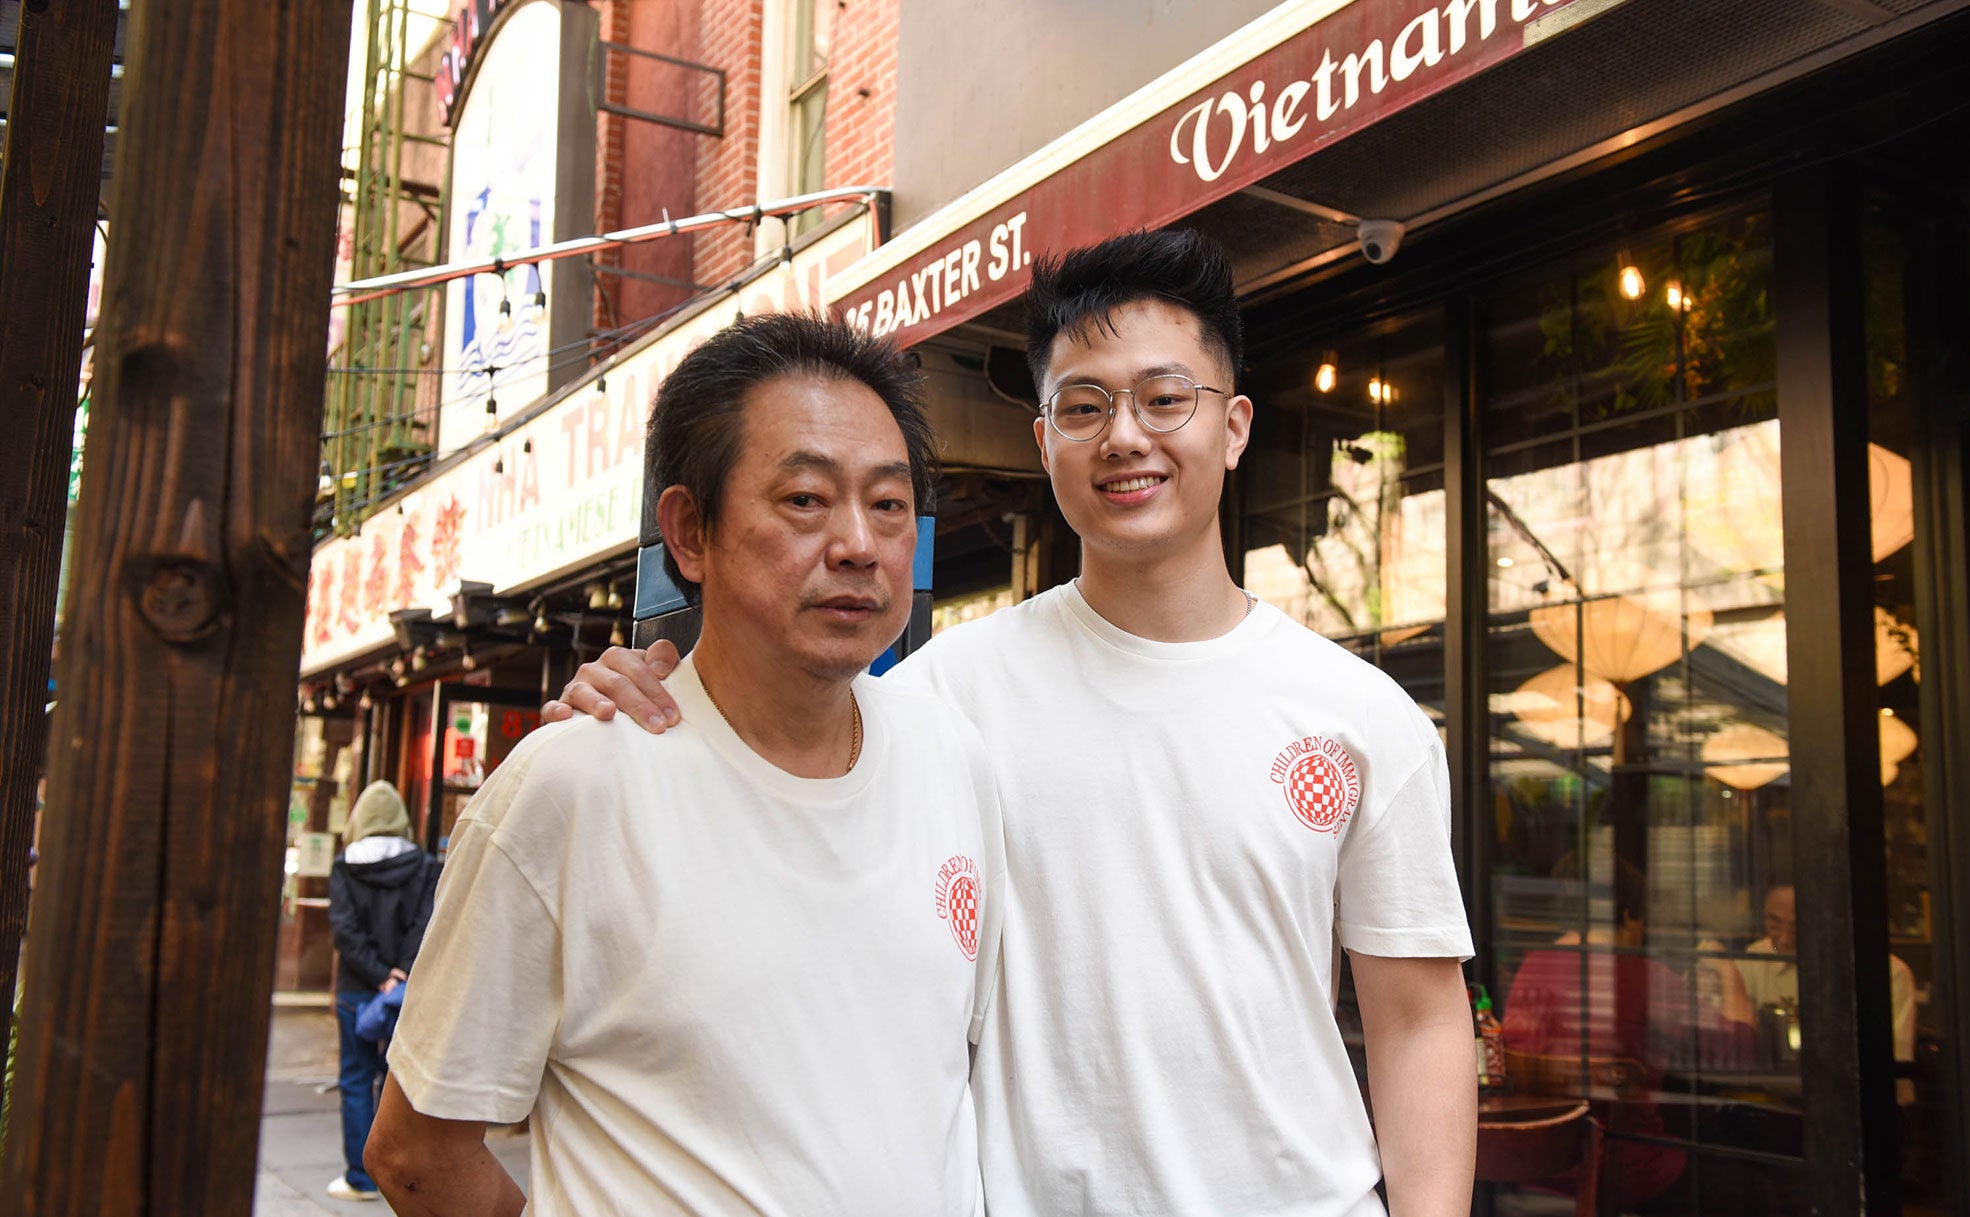 Oldest Vietnamese Restaurant in NY Chinatown